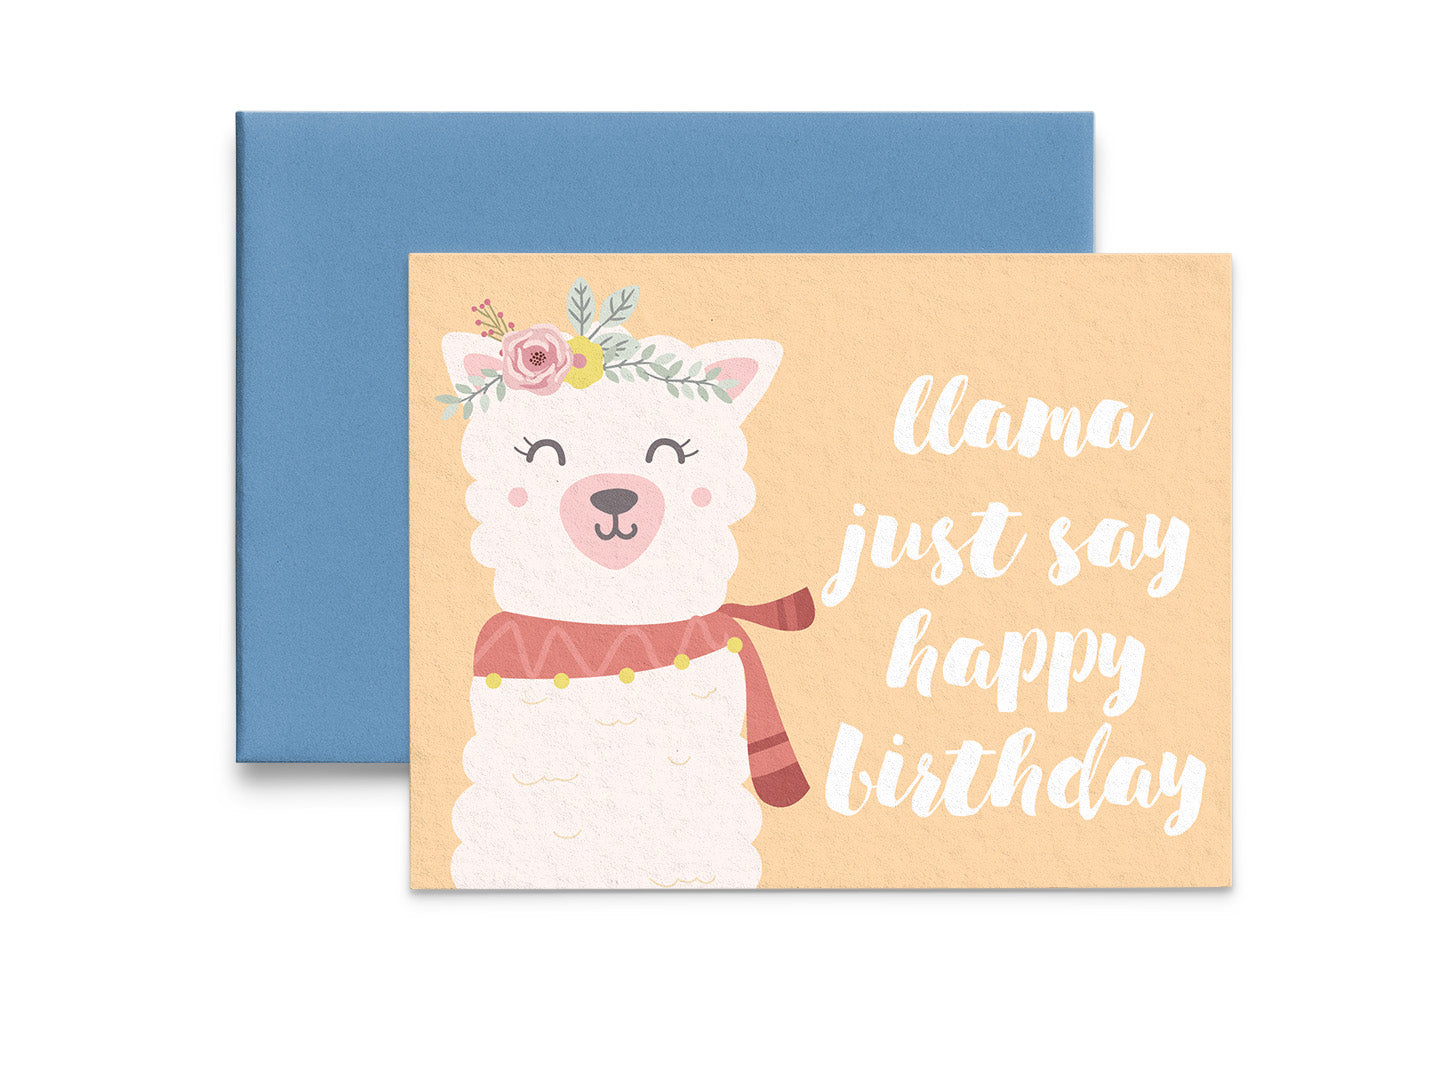 Llama Just Say Happy Birthday Card